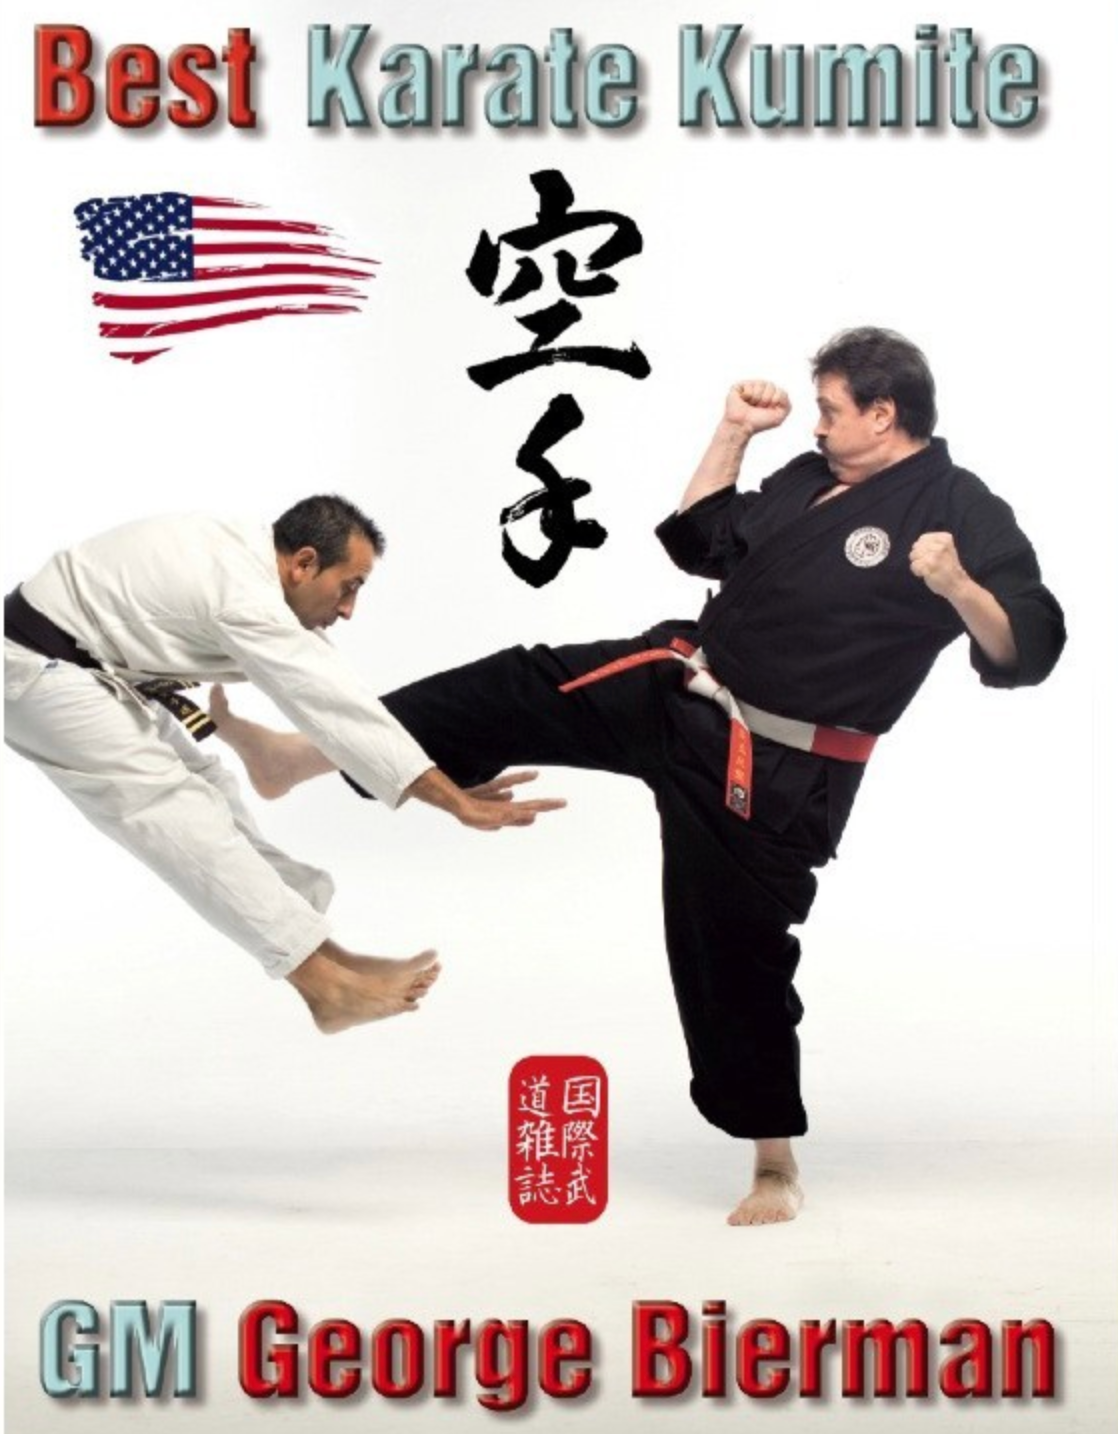 Best Karate Kumite DVD by George Bierman - Budovideos Inc